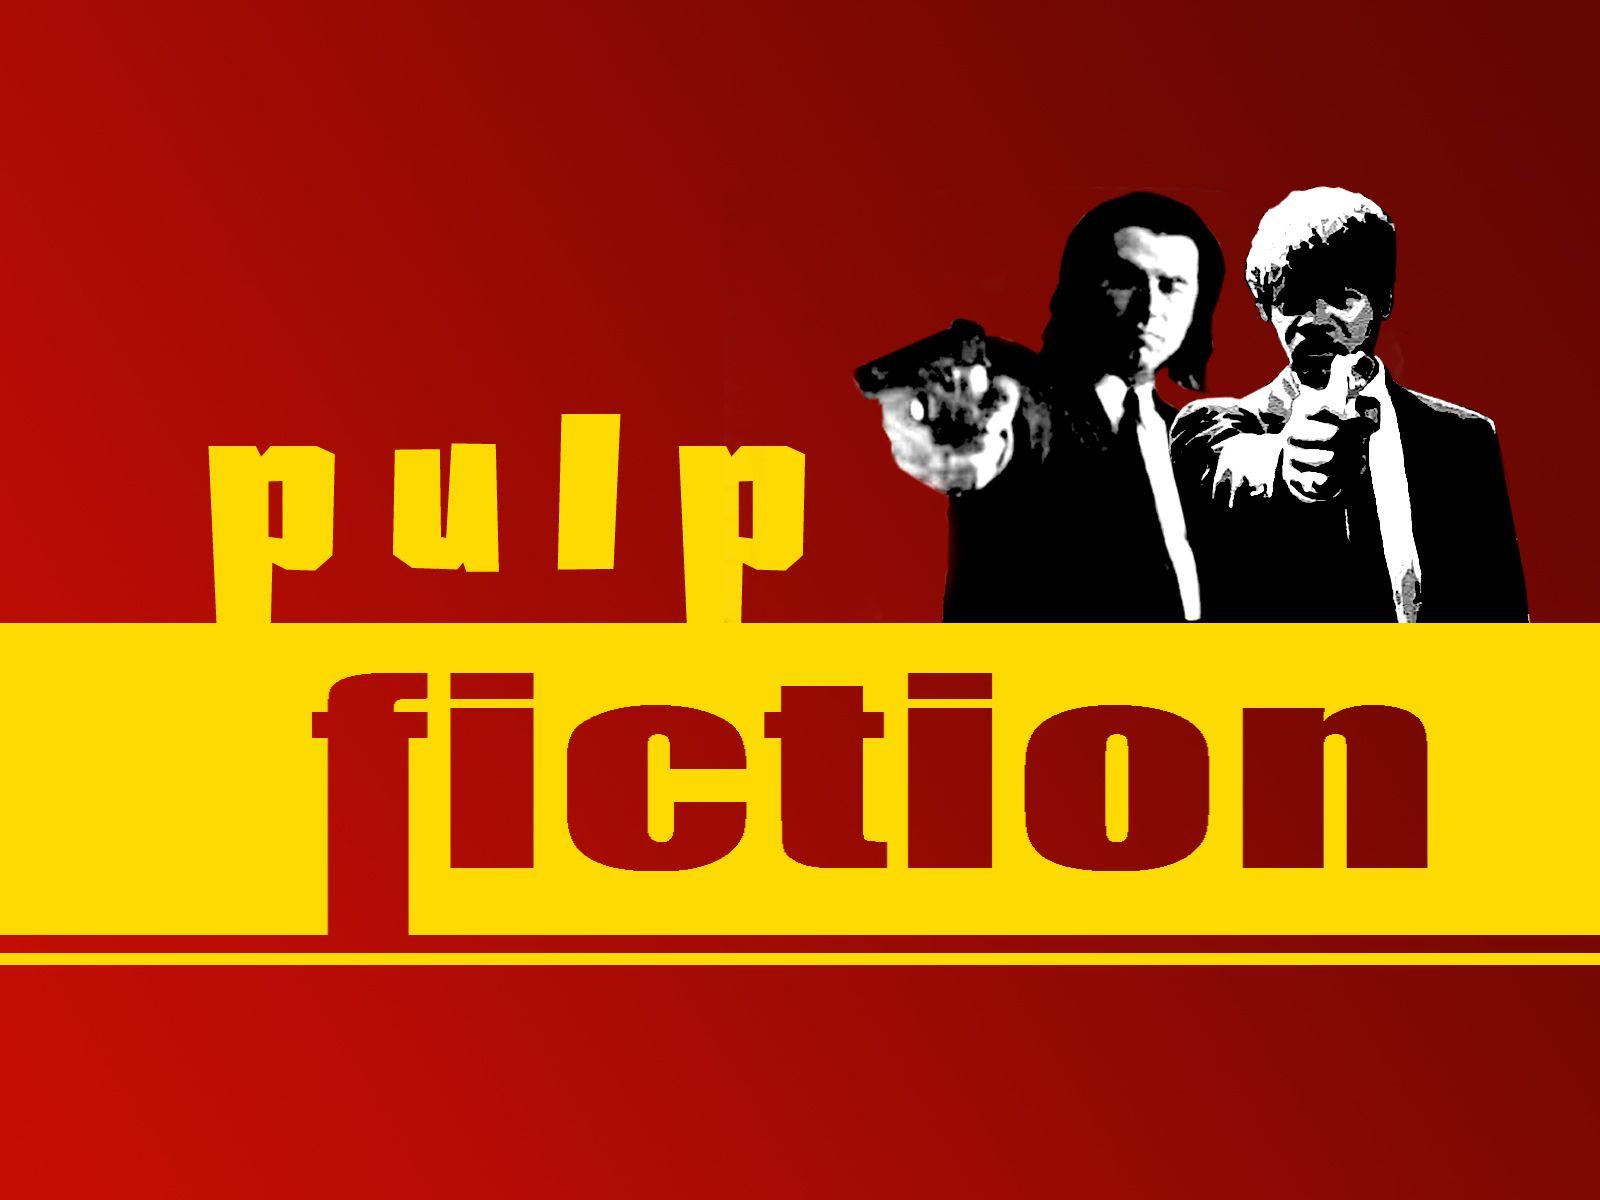 Pulp Fiction Wallpaper. Pulp Fiction Background